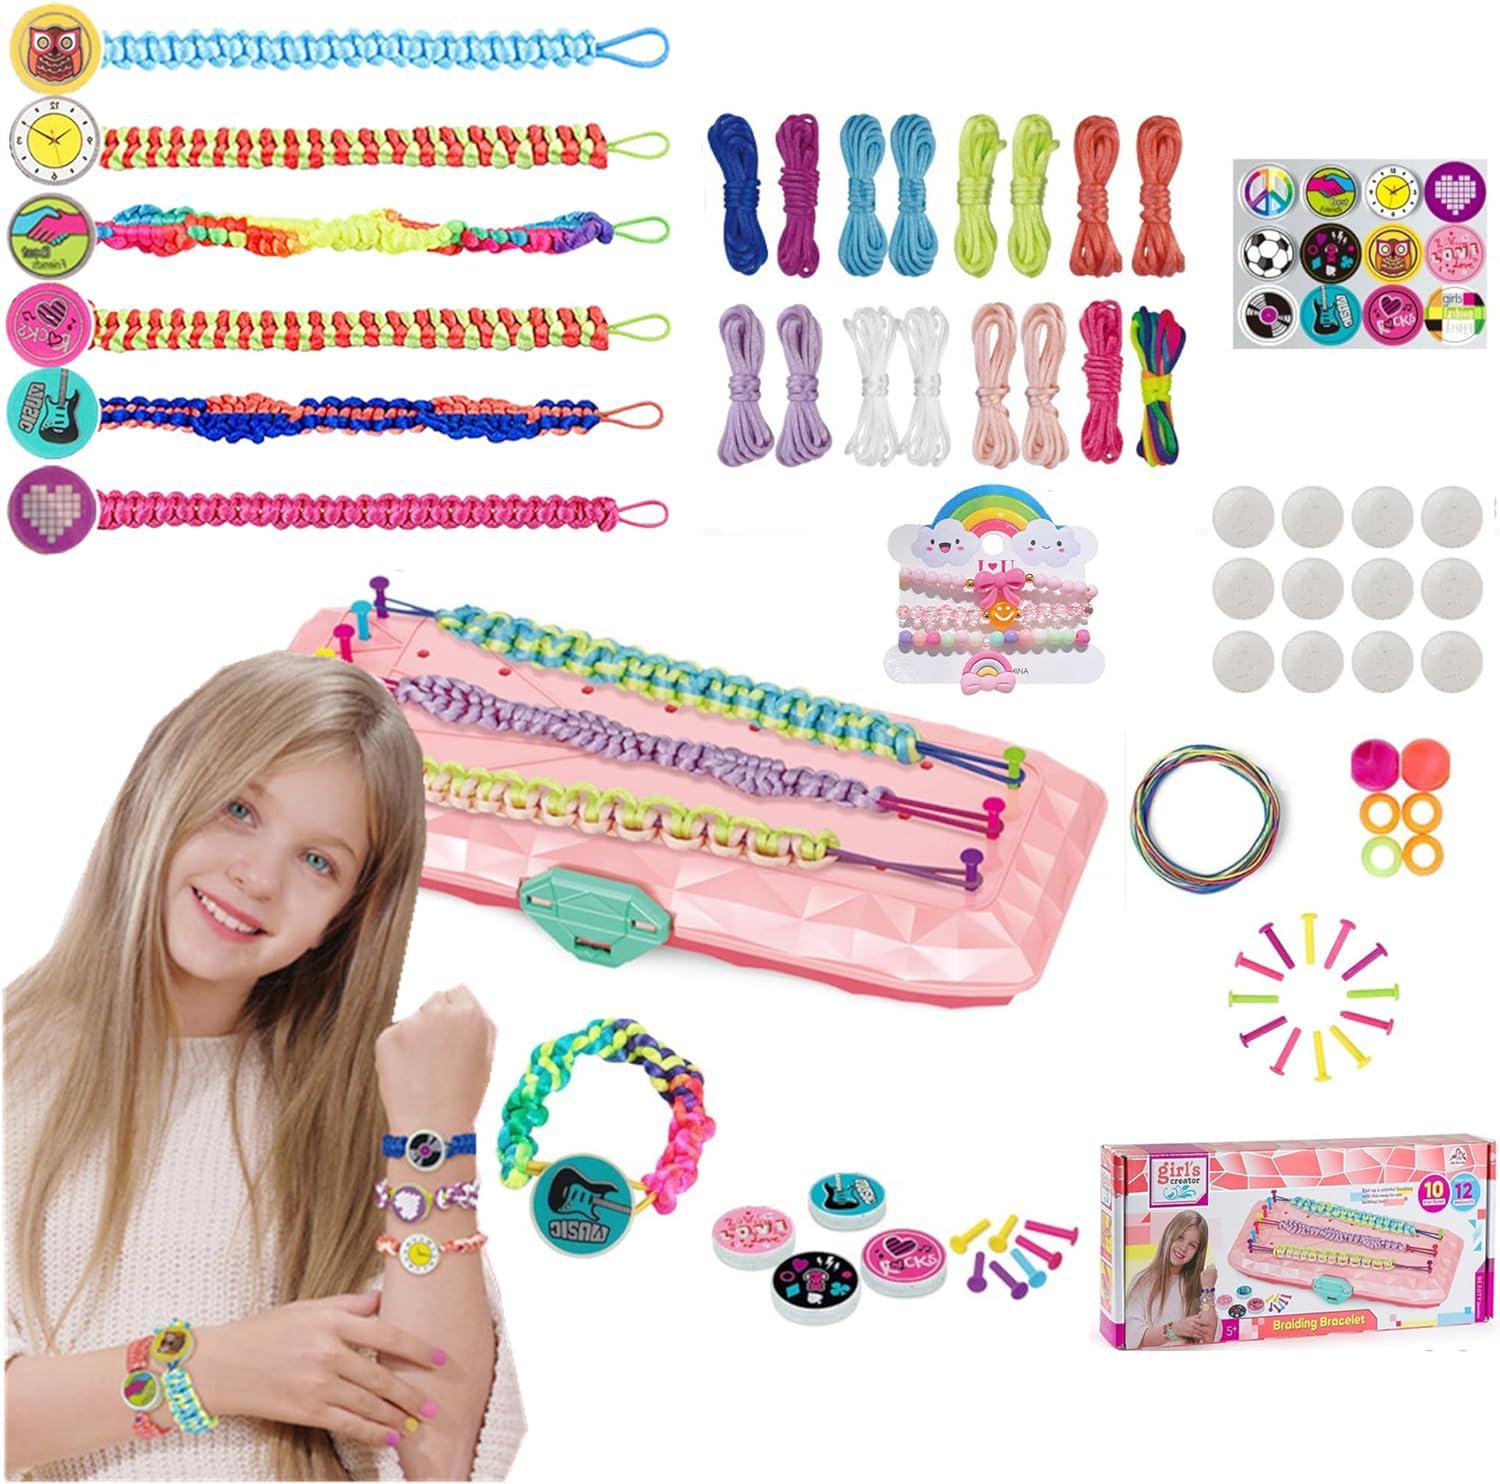 Make It Real - Rainbow Bling Bracelets. DIY Bead and Knot Bracelet Making  Kit 8+